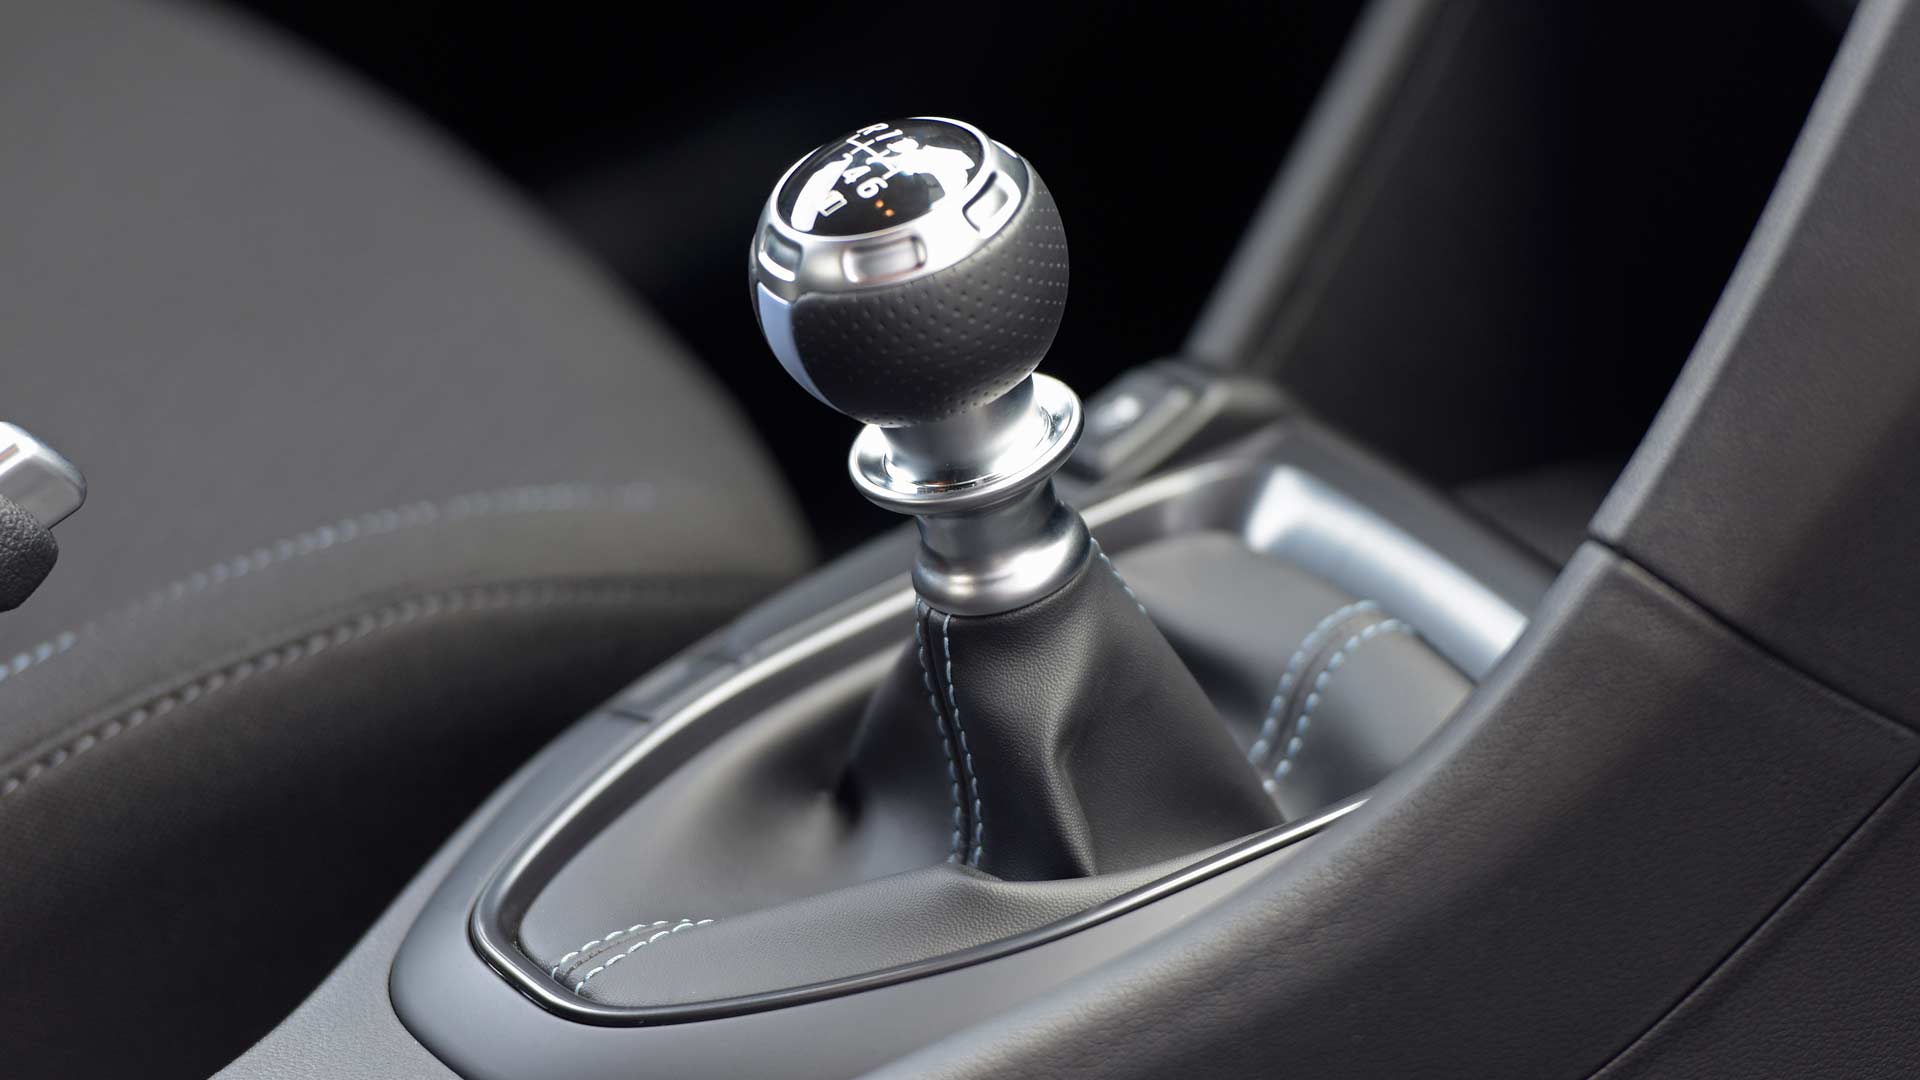 2019-Hyundai-Veloster-N-Interior-Manual-Gear-Lever